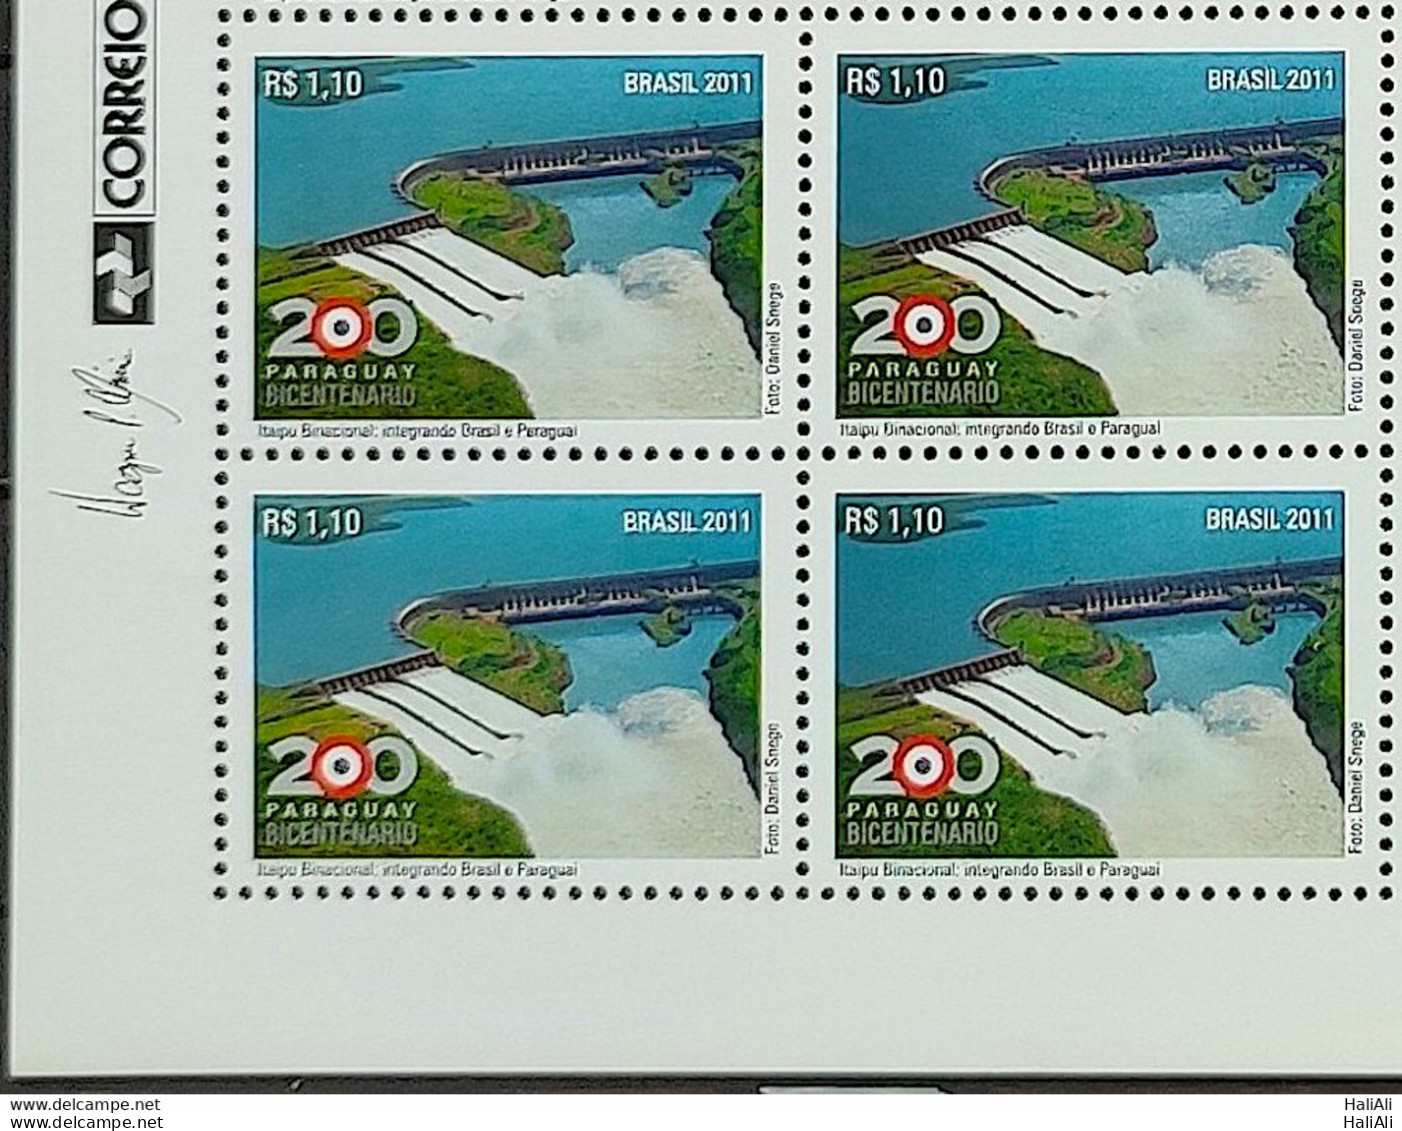 C 3088 Brazil Stamp Diplomatic Relations Paraguay Itaipu Energy Hidreletic 2011 Block Of 4 Vignette Correios - Unused Stamps